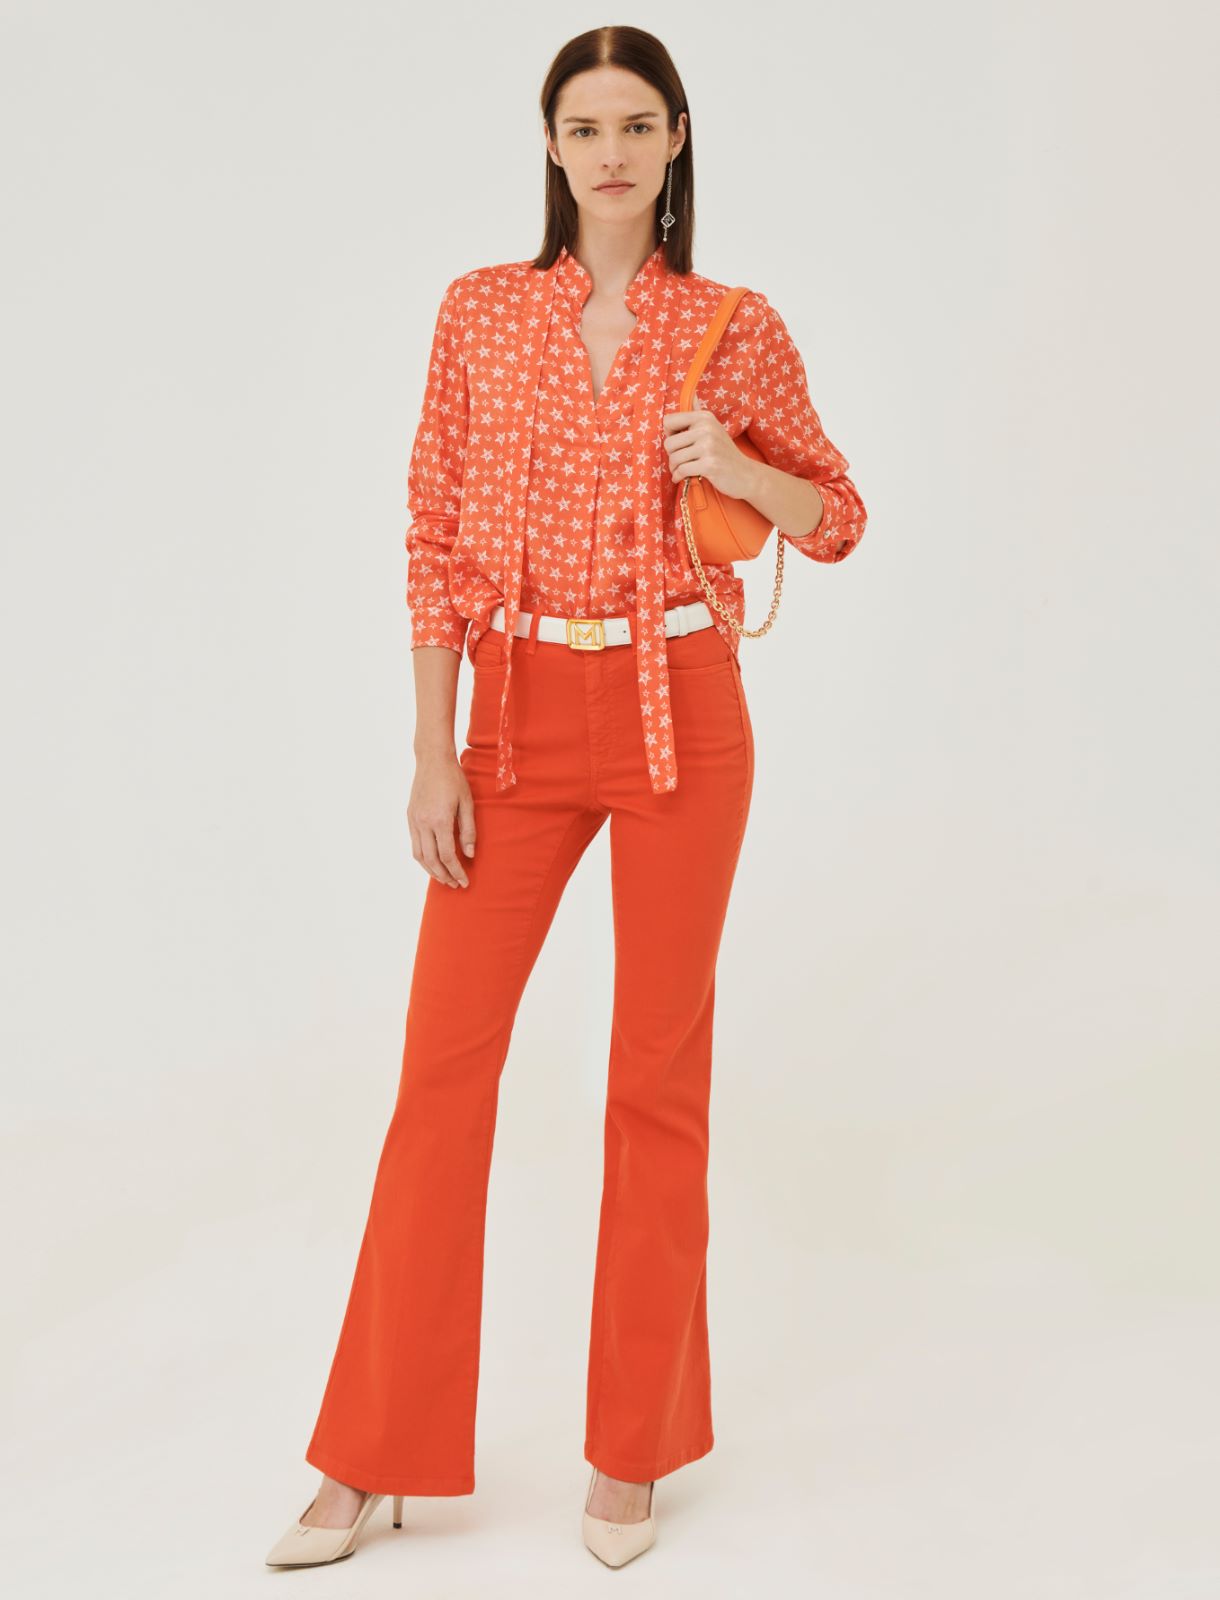 Patterned blouse - Orange - Marella